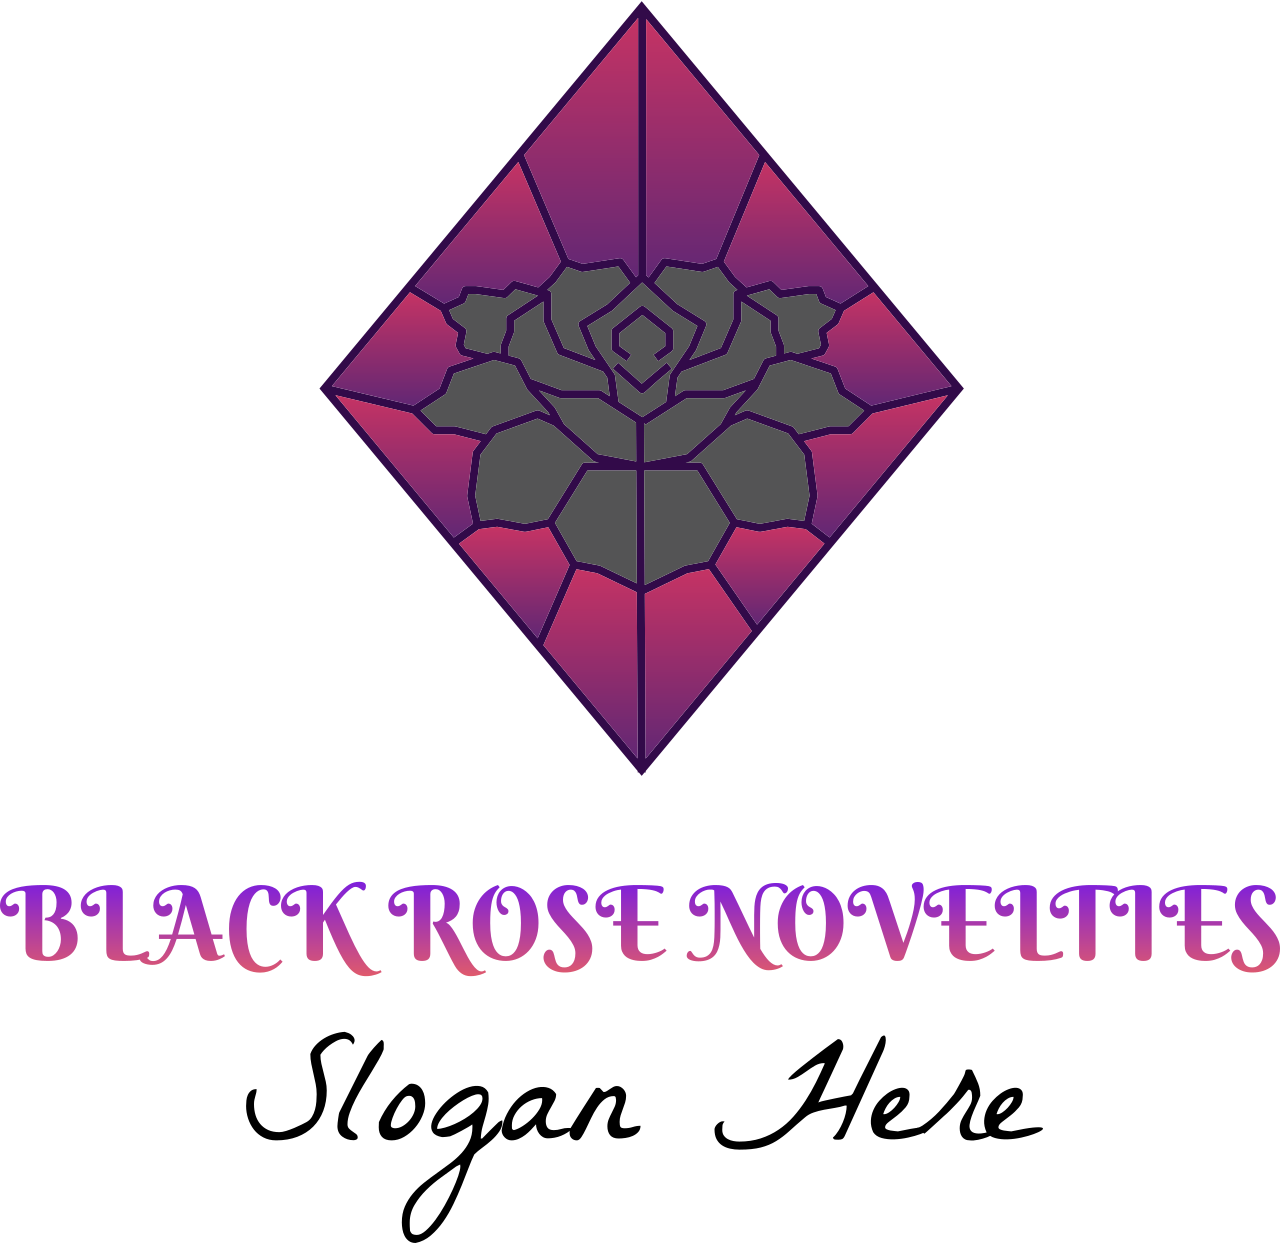 BLACK ROSE NOVELTIES's web page